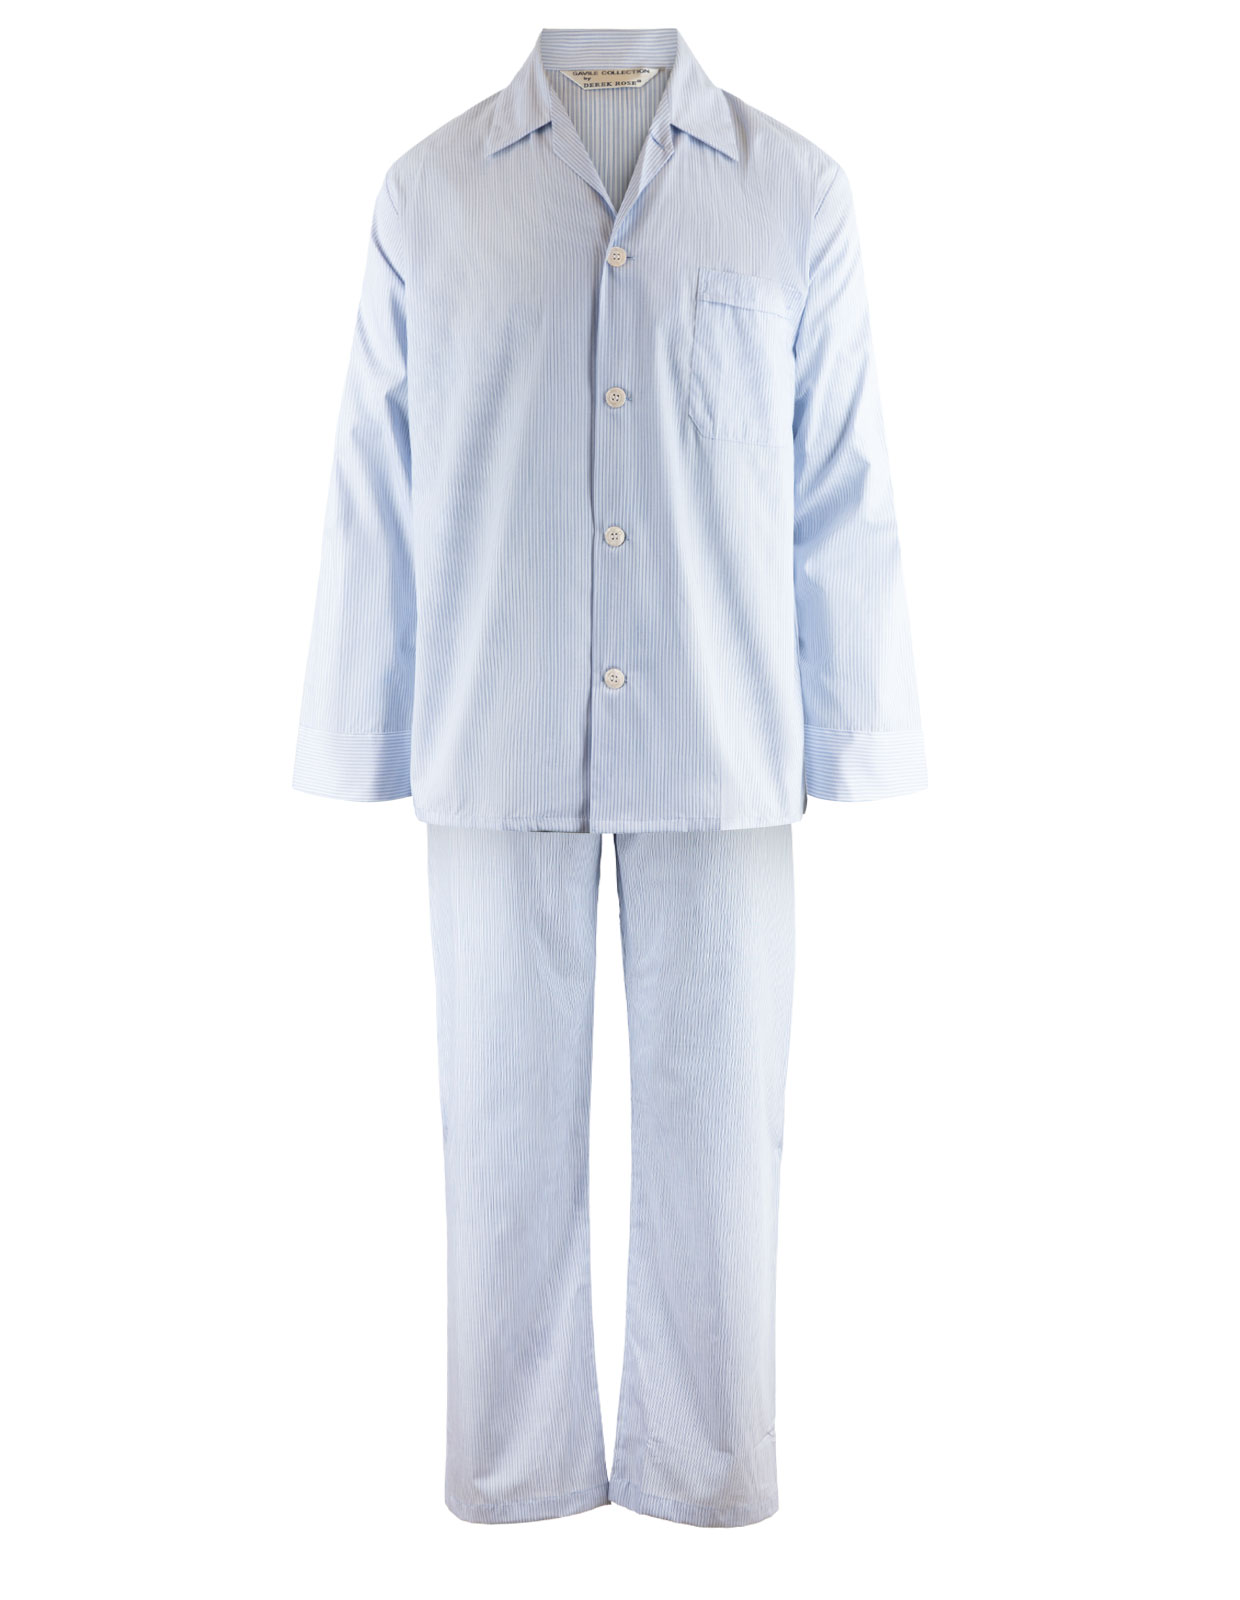 Saville Pyjamas Blå Stl 48